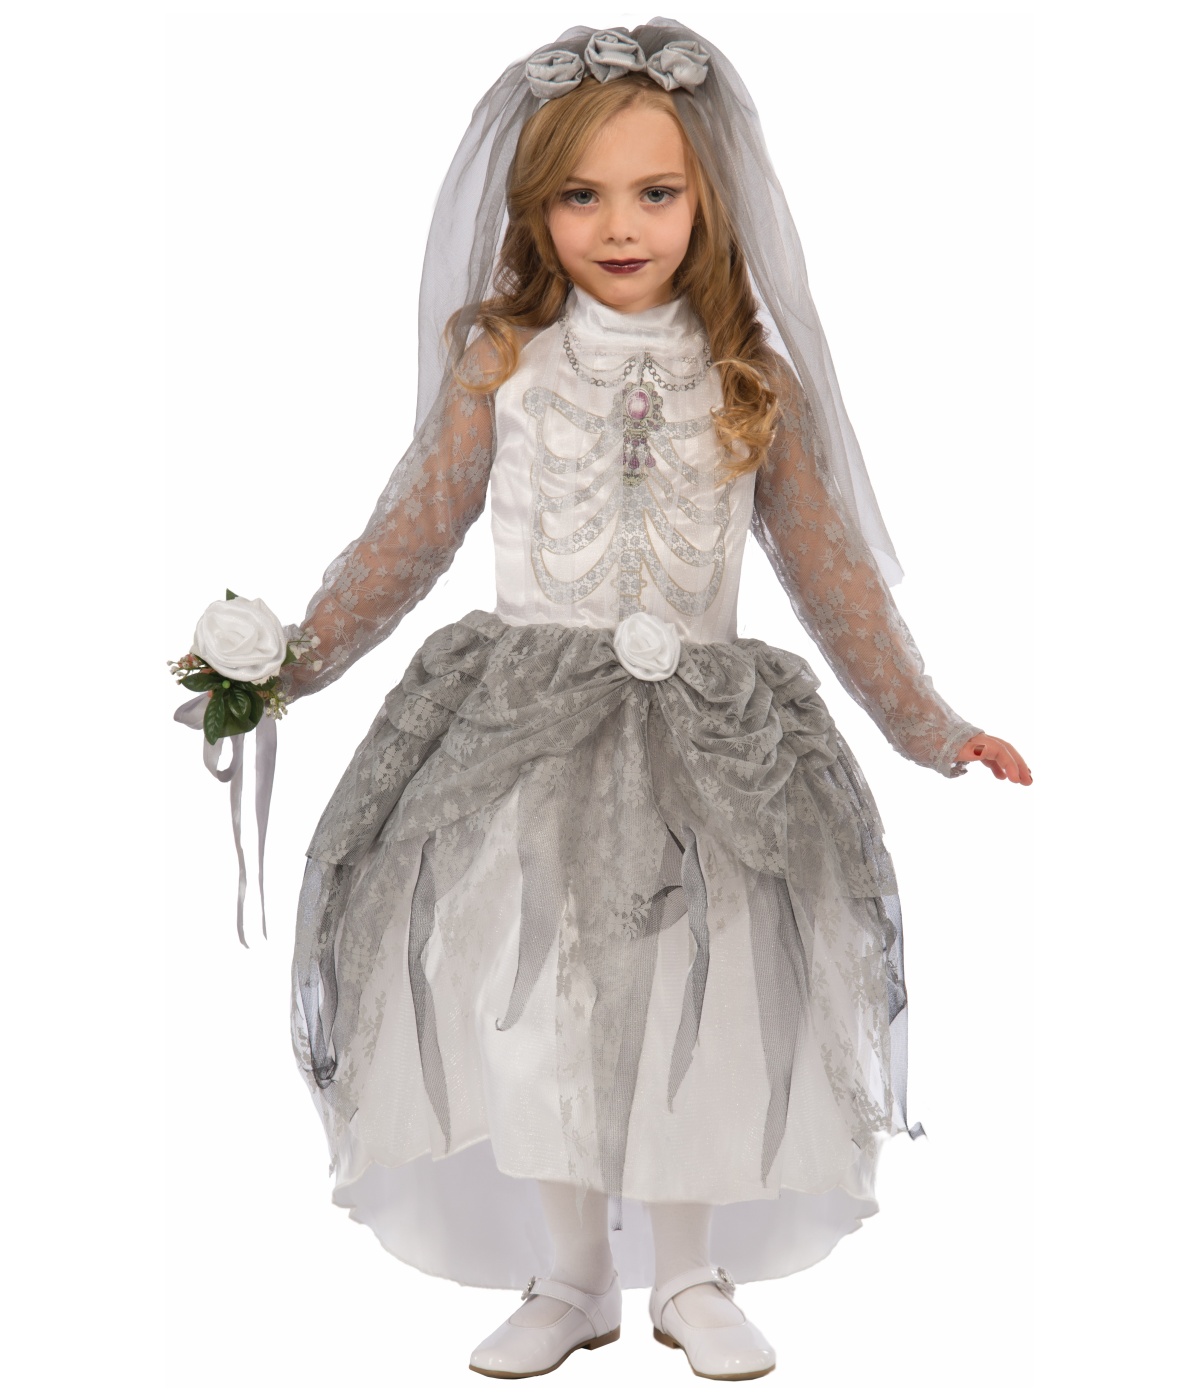  Girls Bride Skeleton Costume